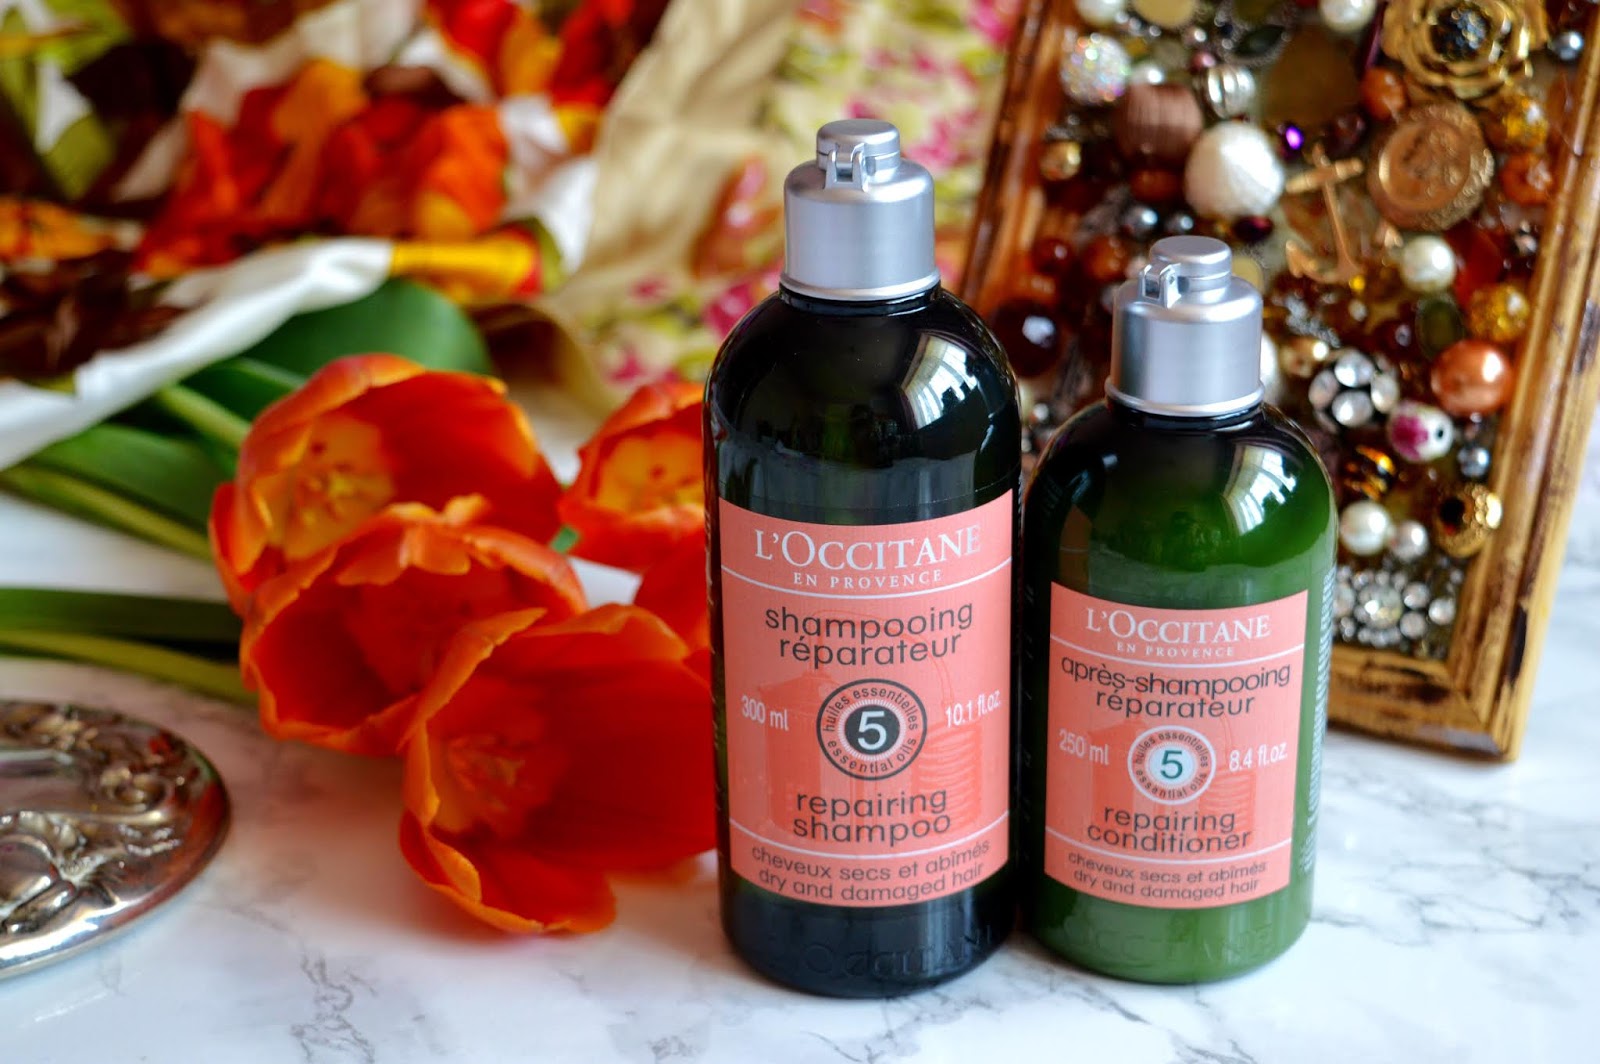 L'Occitane 5 essential oils shampoo + conditioner repairing hair care duo | The Perks Of Mollie